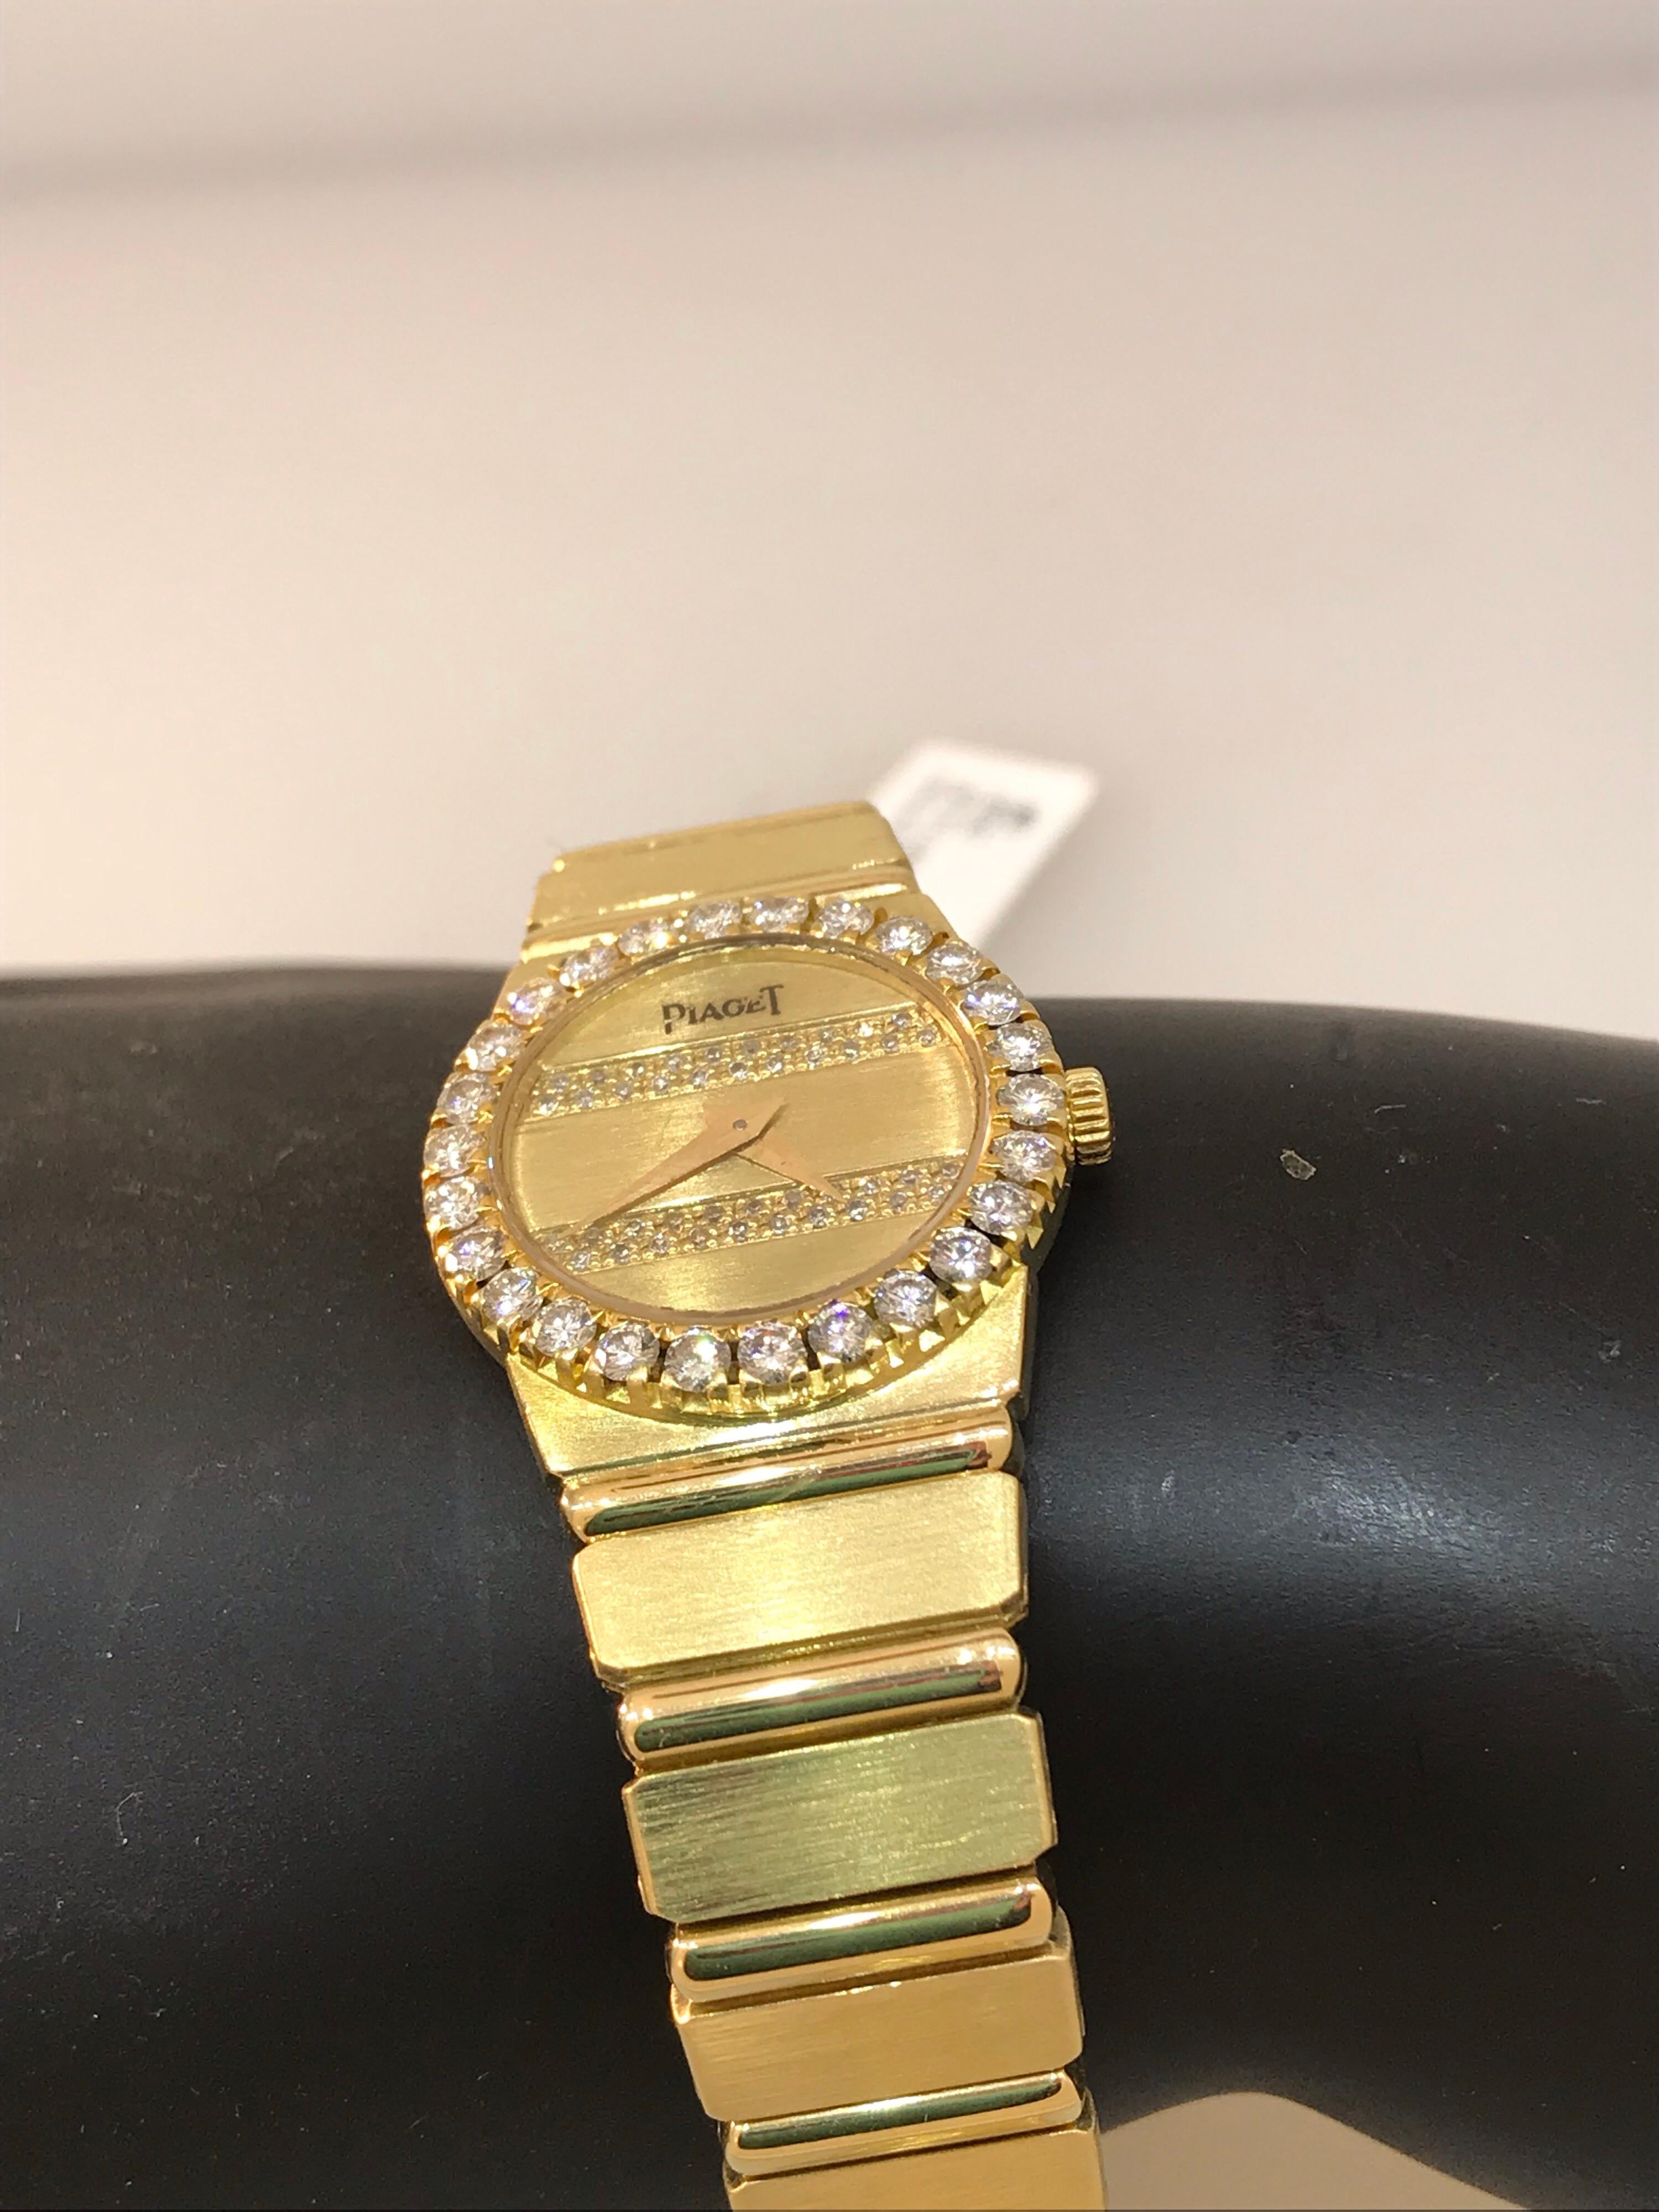 Piaget Polo 18 Karat Gold Diamond Bezel and Dial Ladies Bracelet Watch 8296 For Sale 3